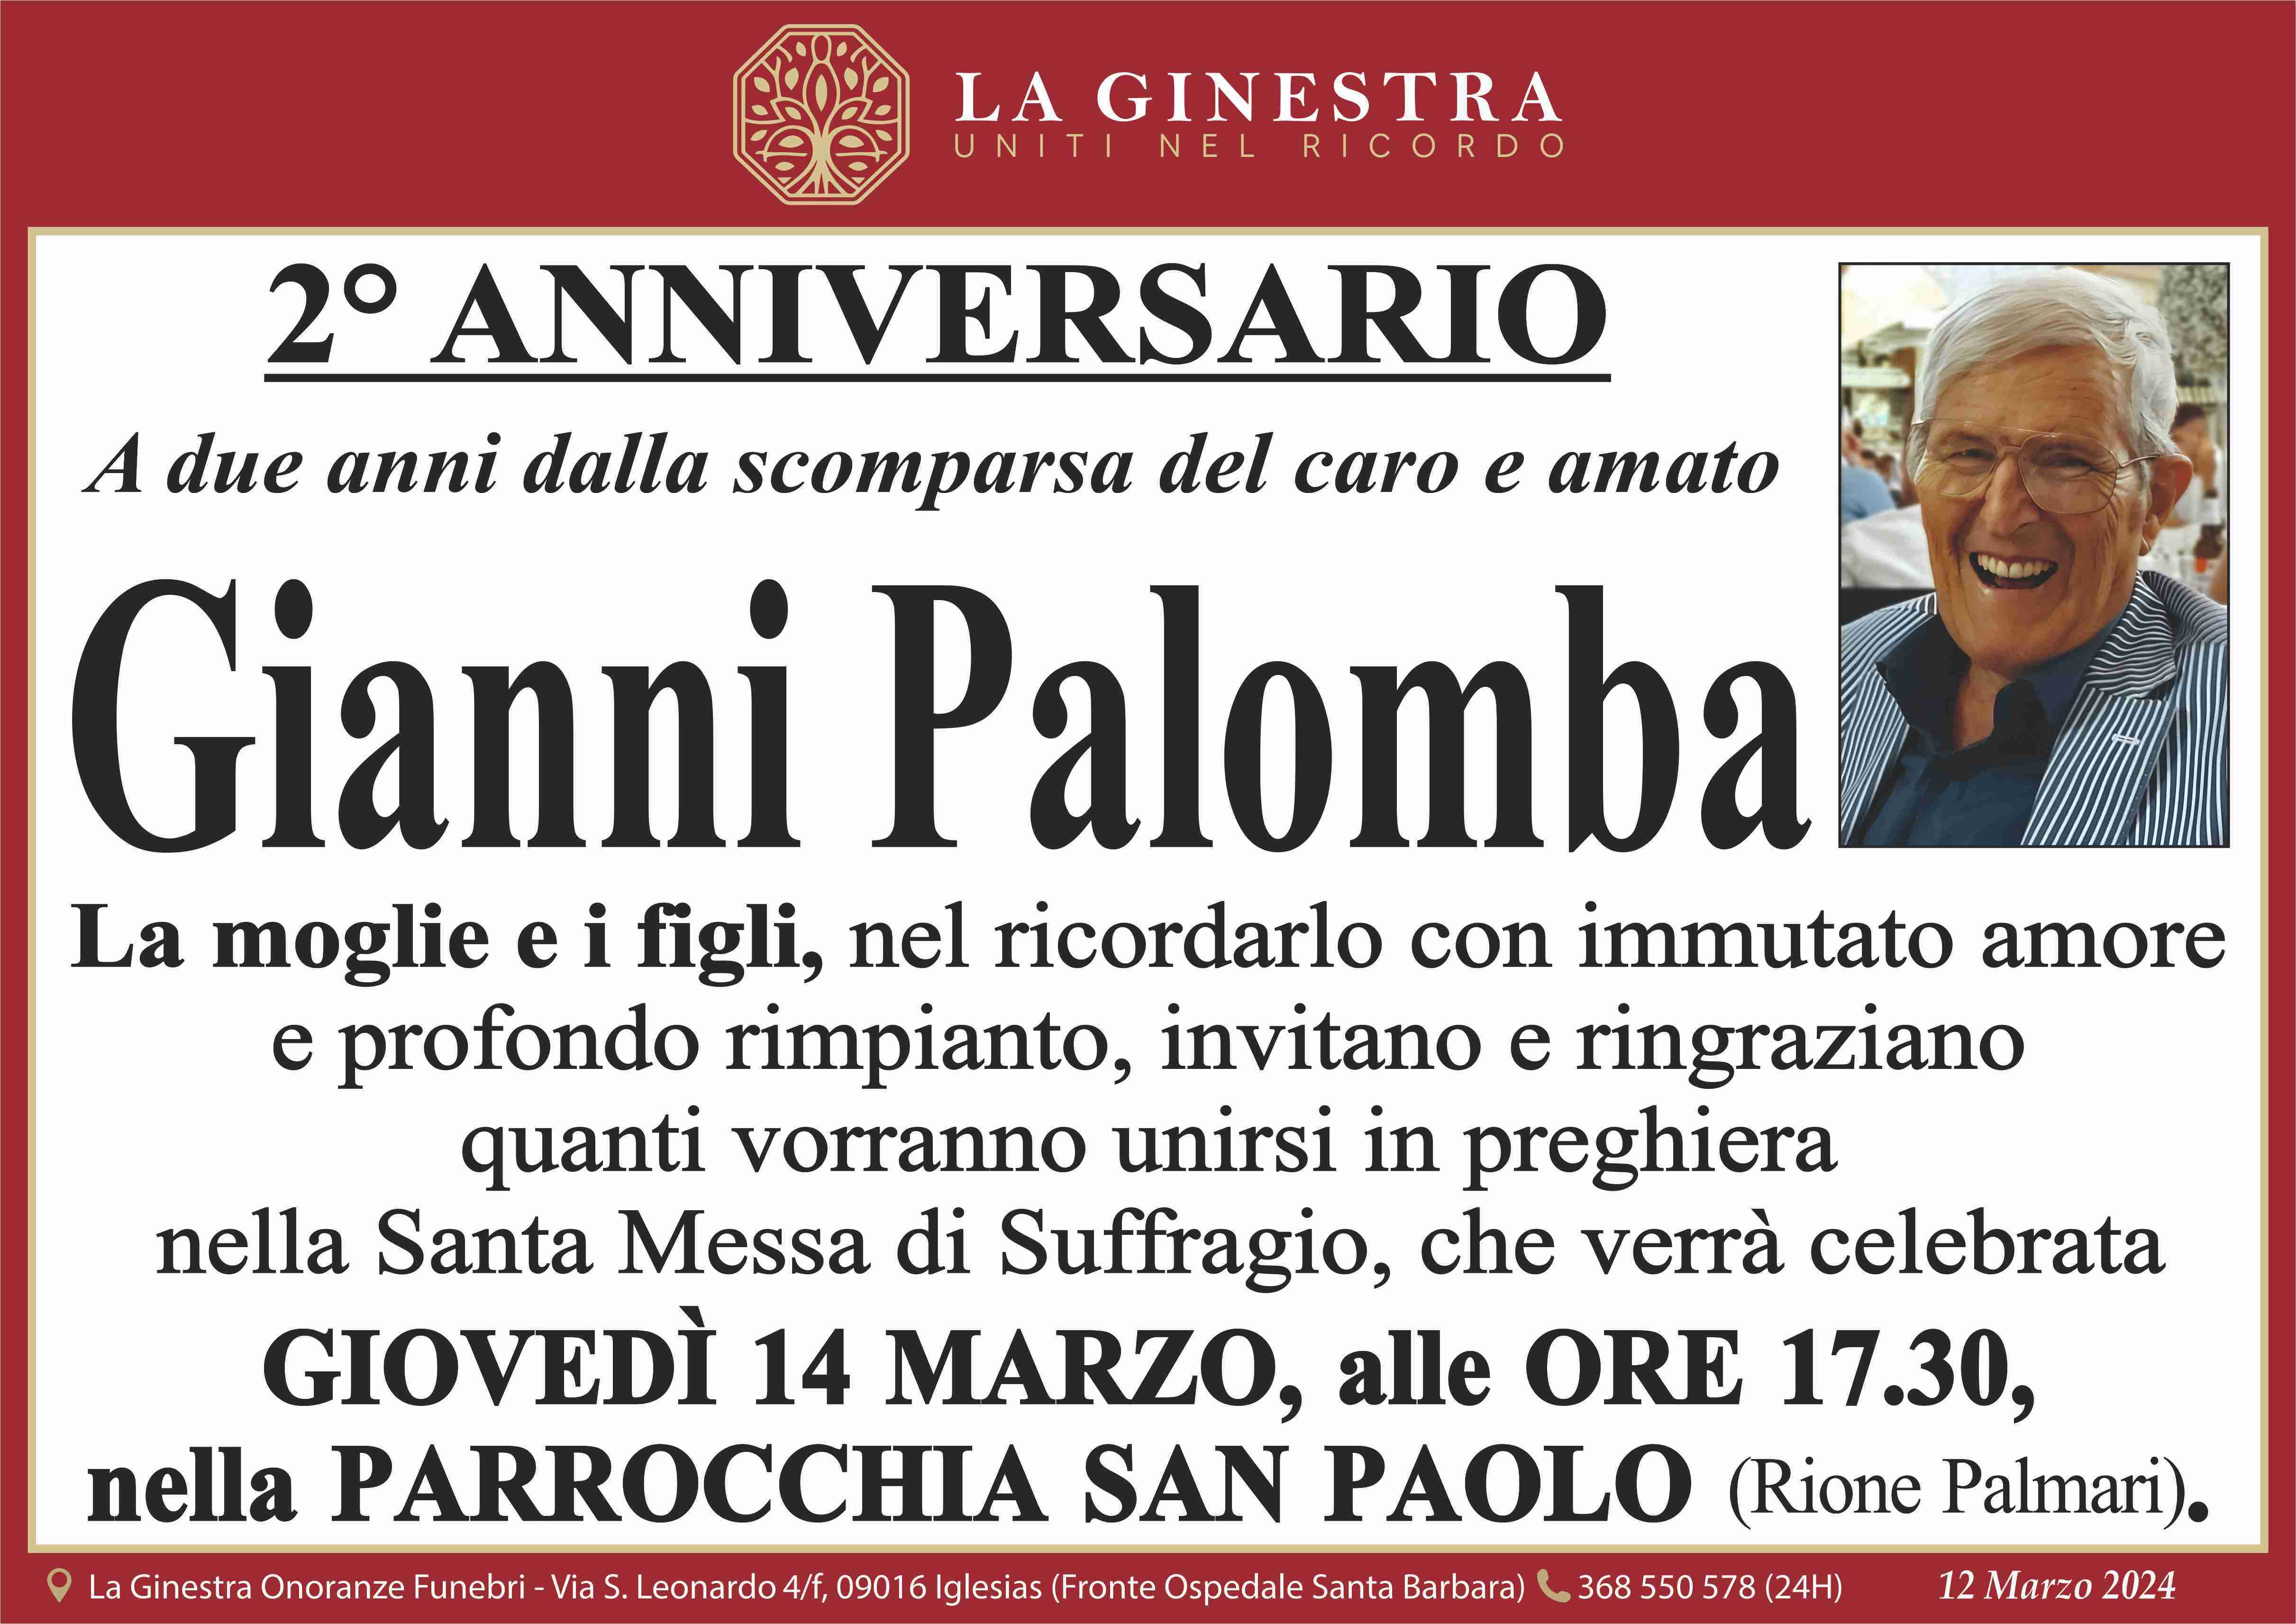 Gianni Palomba